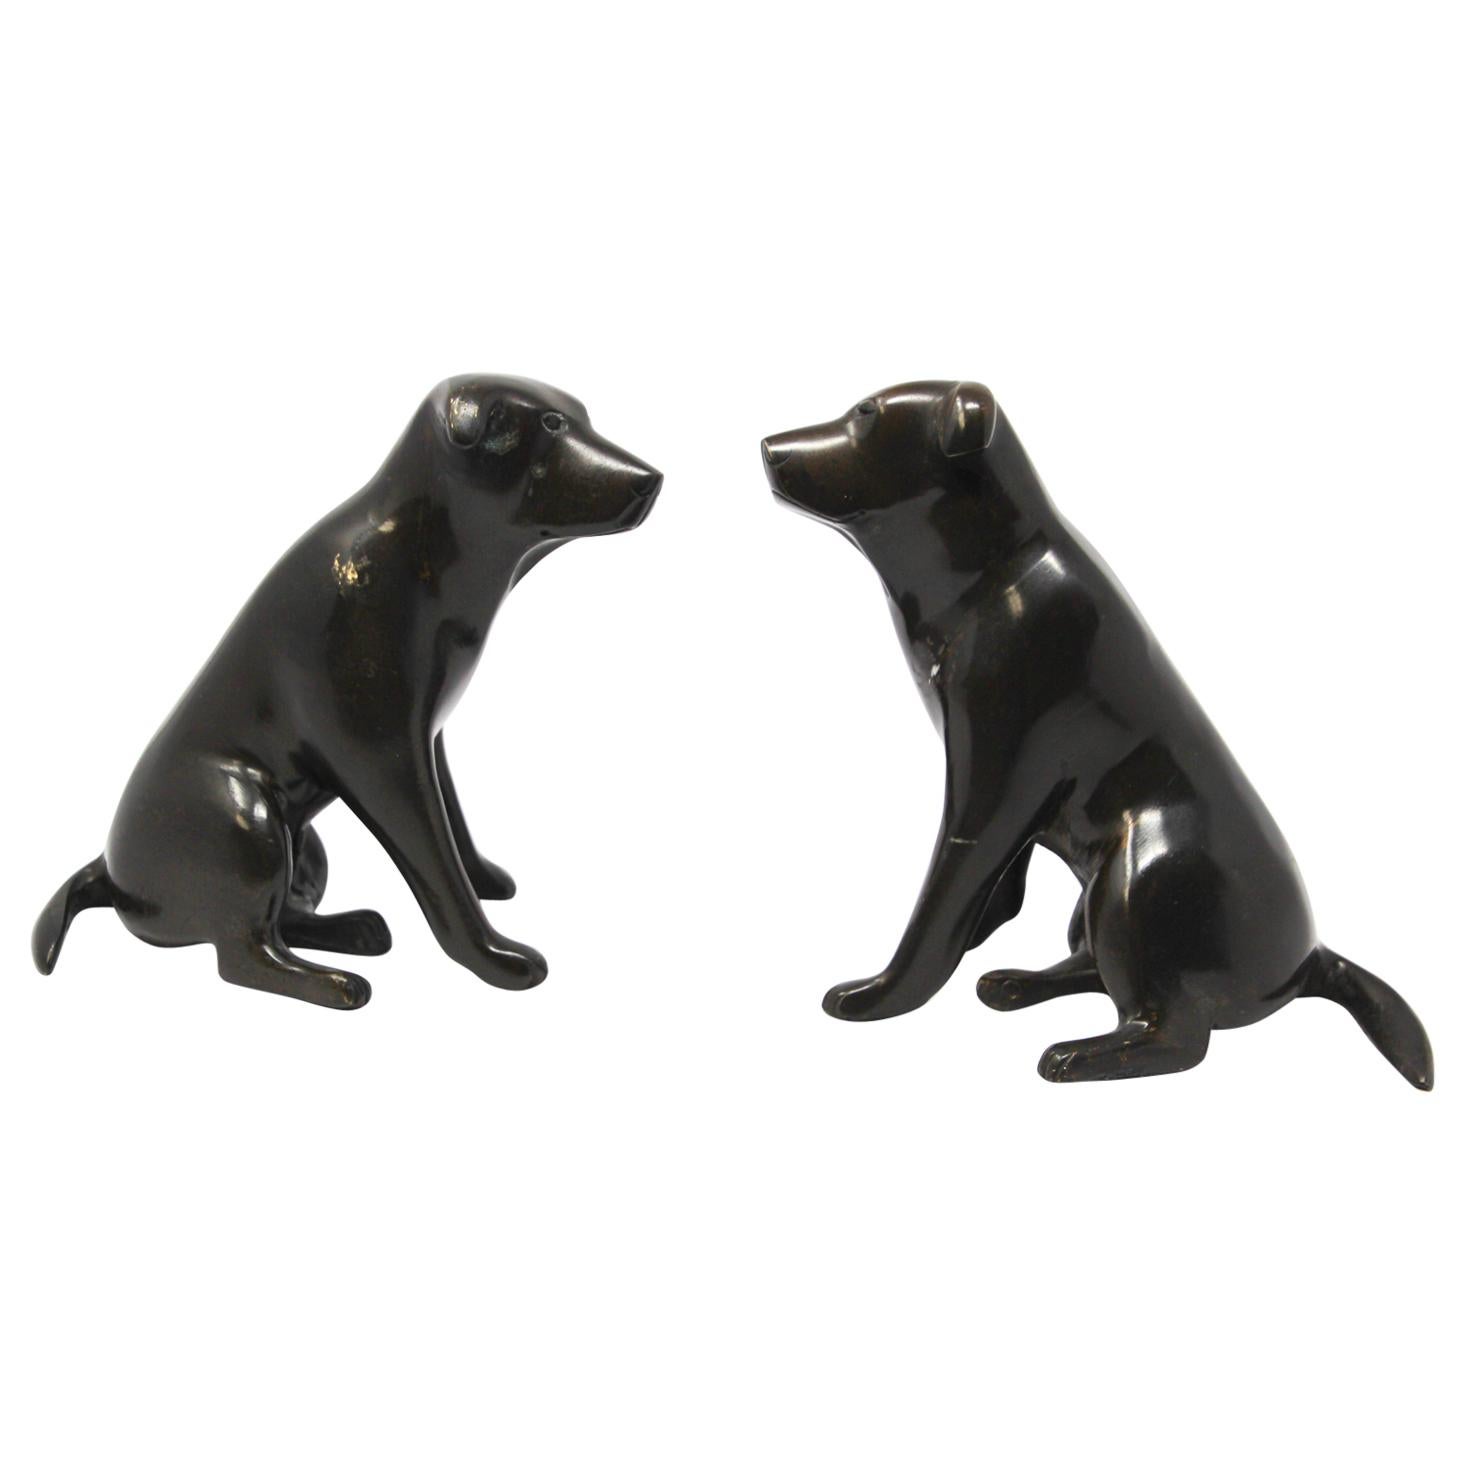 Set of Cast Metal Sculpture of Labrador Dogs Bookends